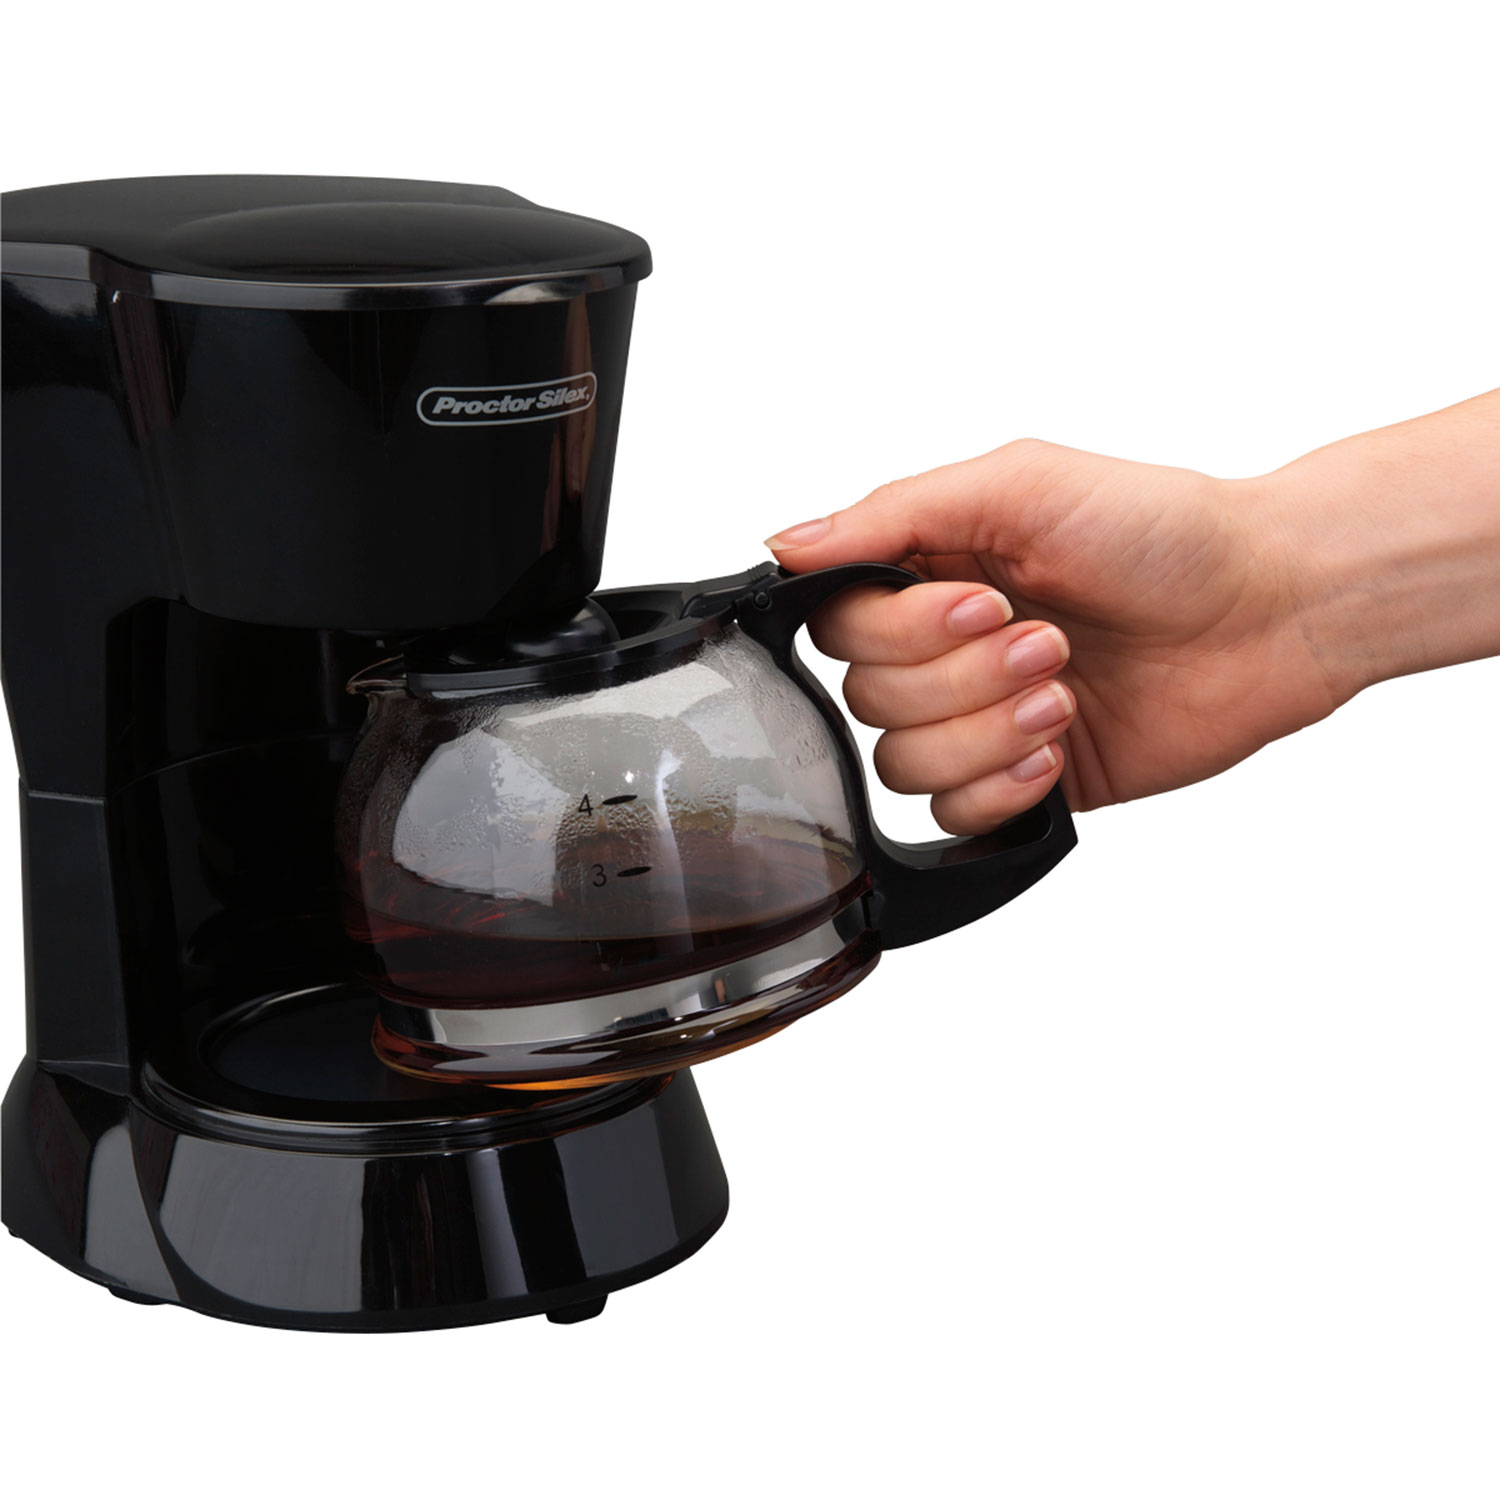 4 Cup Coffee Maker (black) - Model 48138 - Proctor-Silex